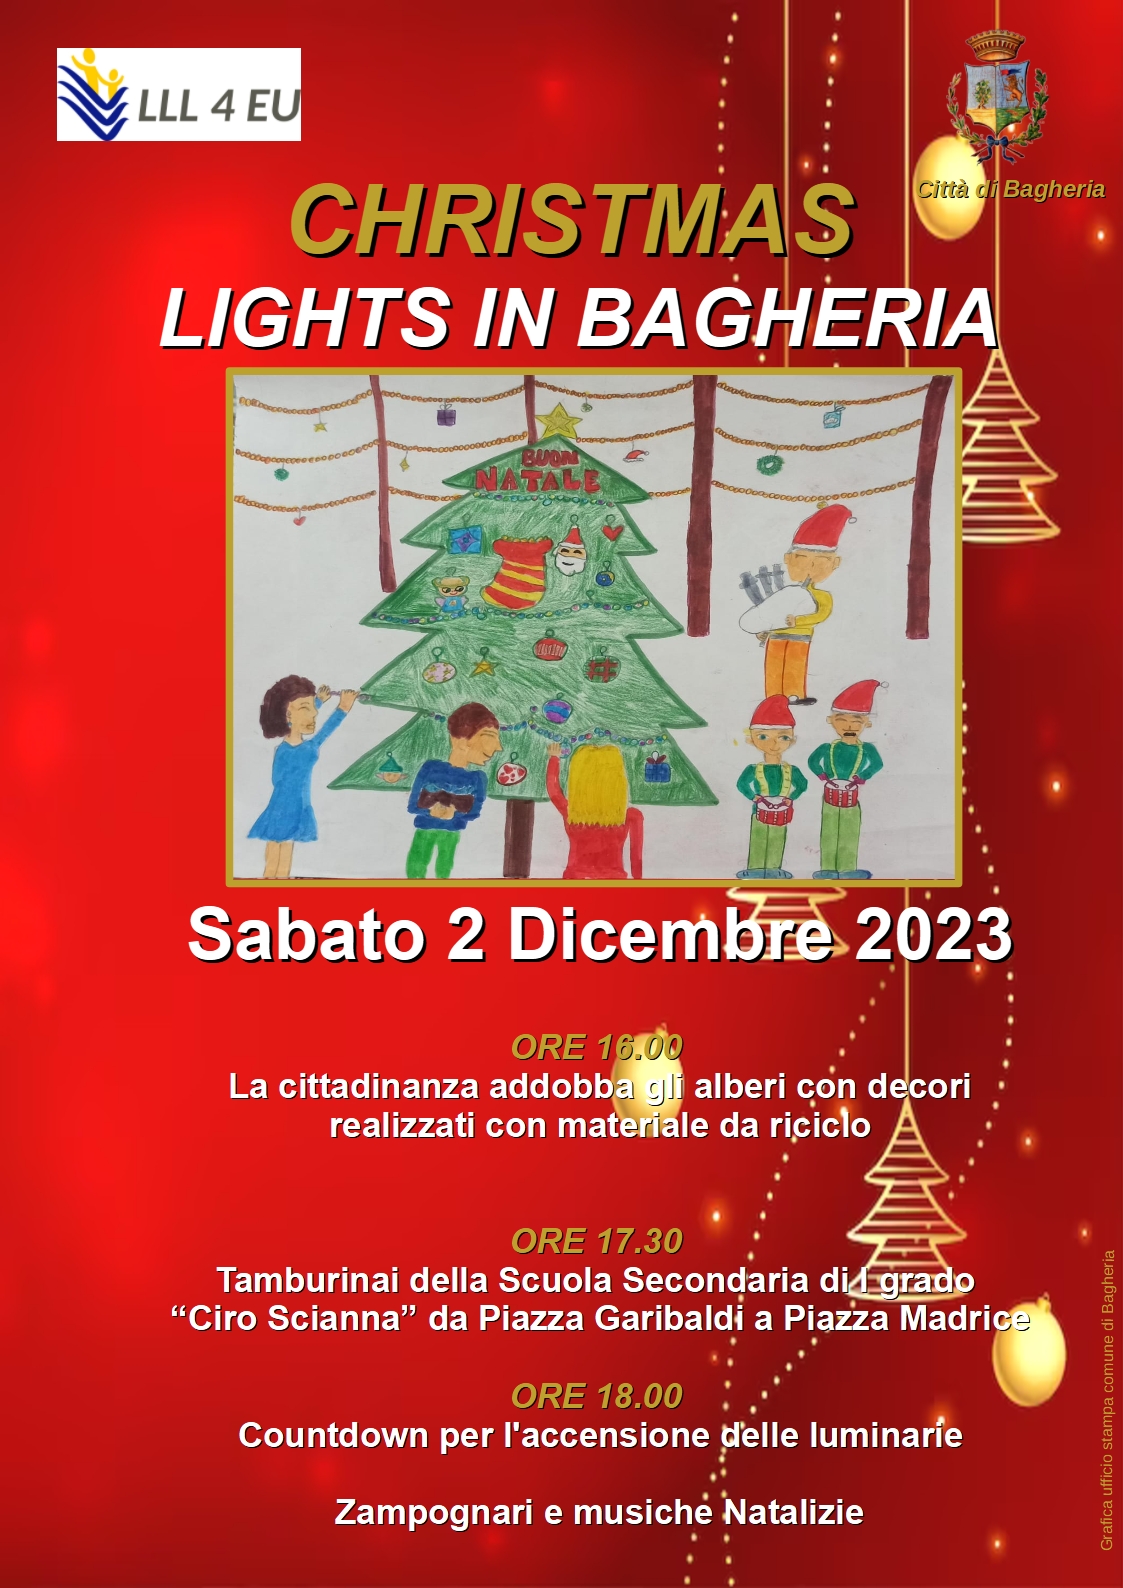 Christmas lights in Bagheria, si accende il Natale a Bagheria sabato 2 dicembre